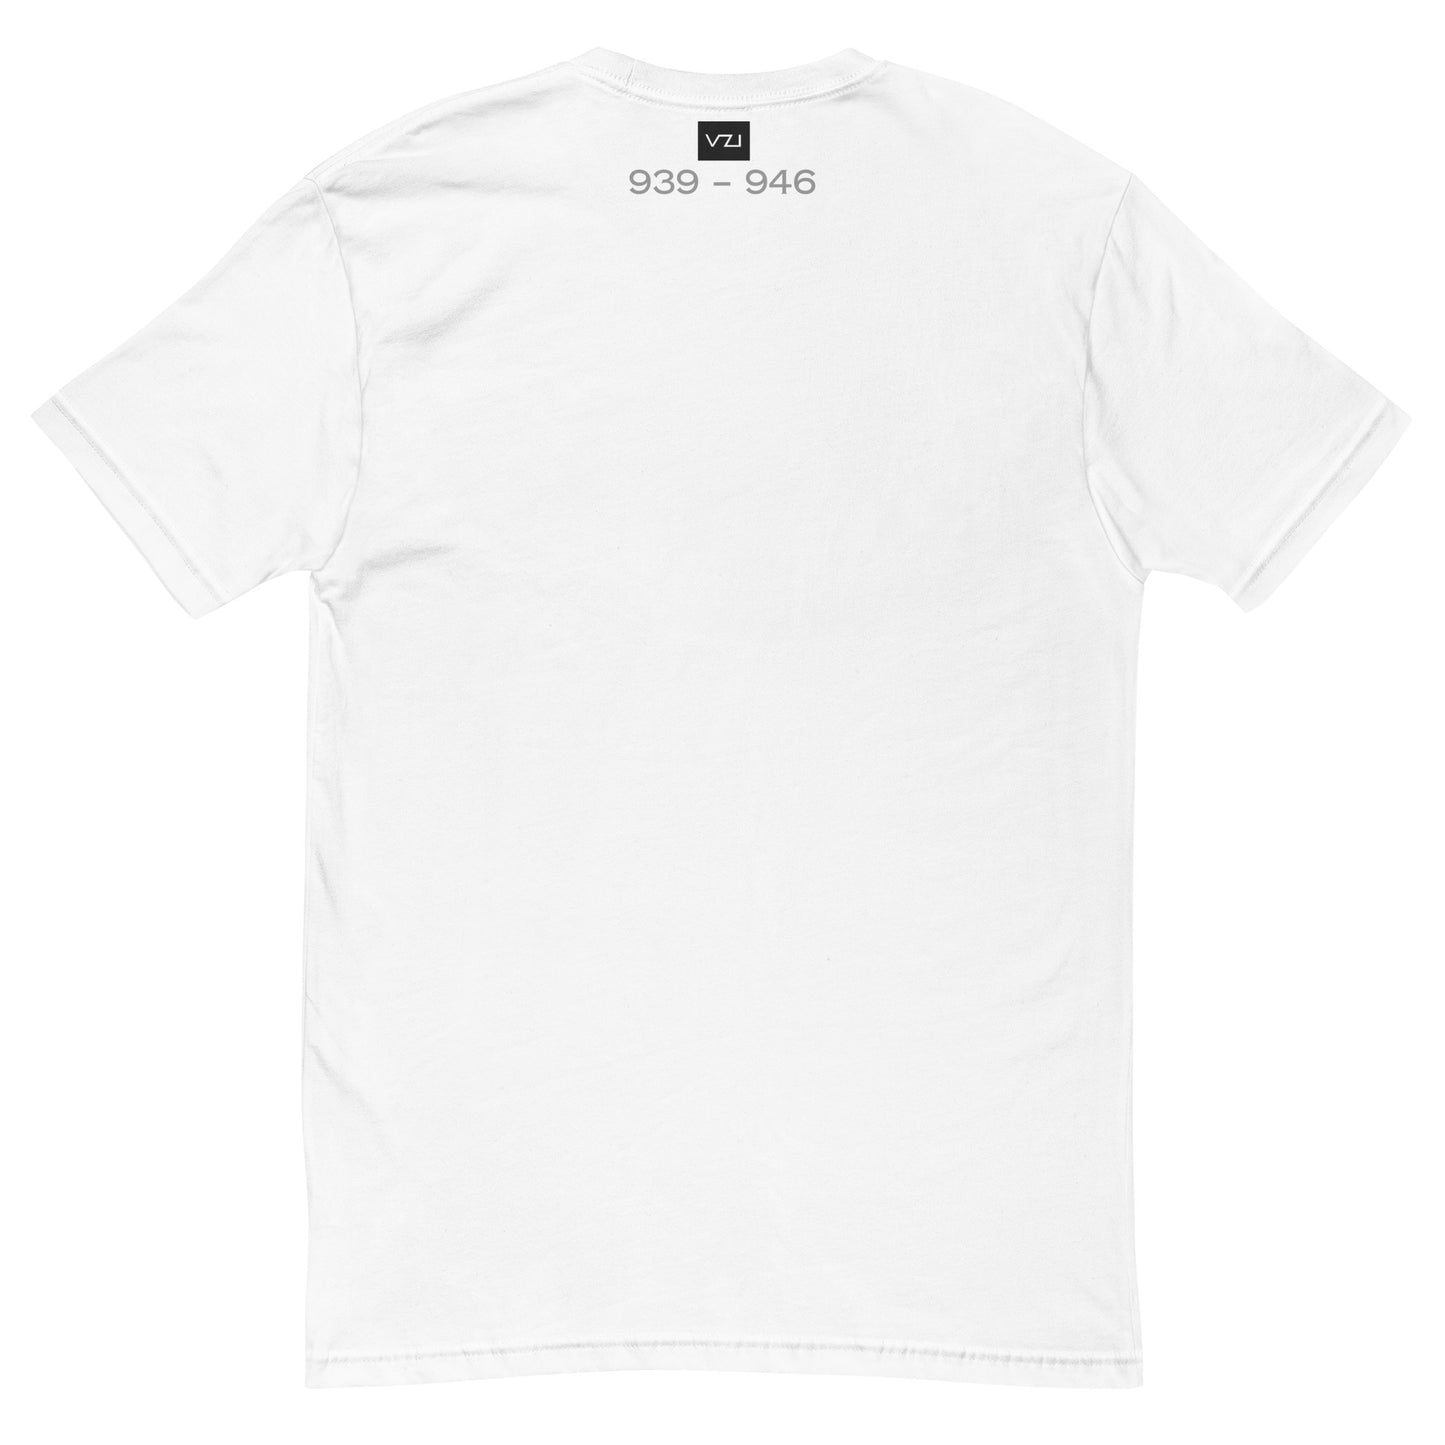 Vazzari Couture: Men's Fitted T-Shirt: Edmund(939 – 946) Smart Casual, Comfort Fit, Soft